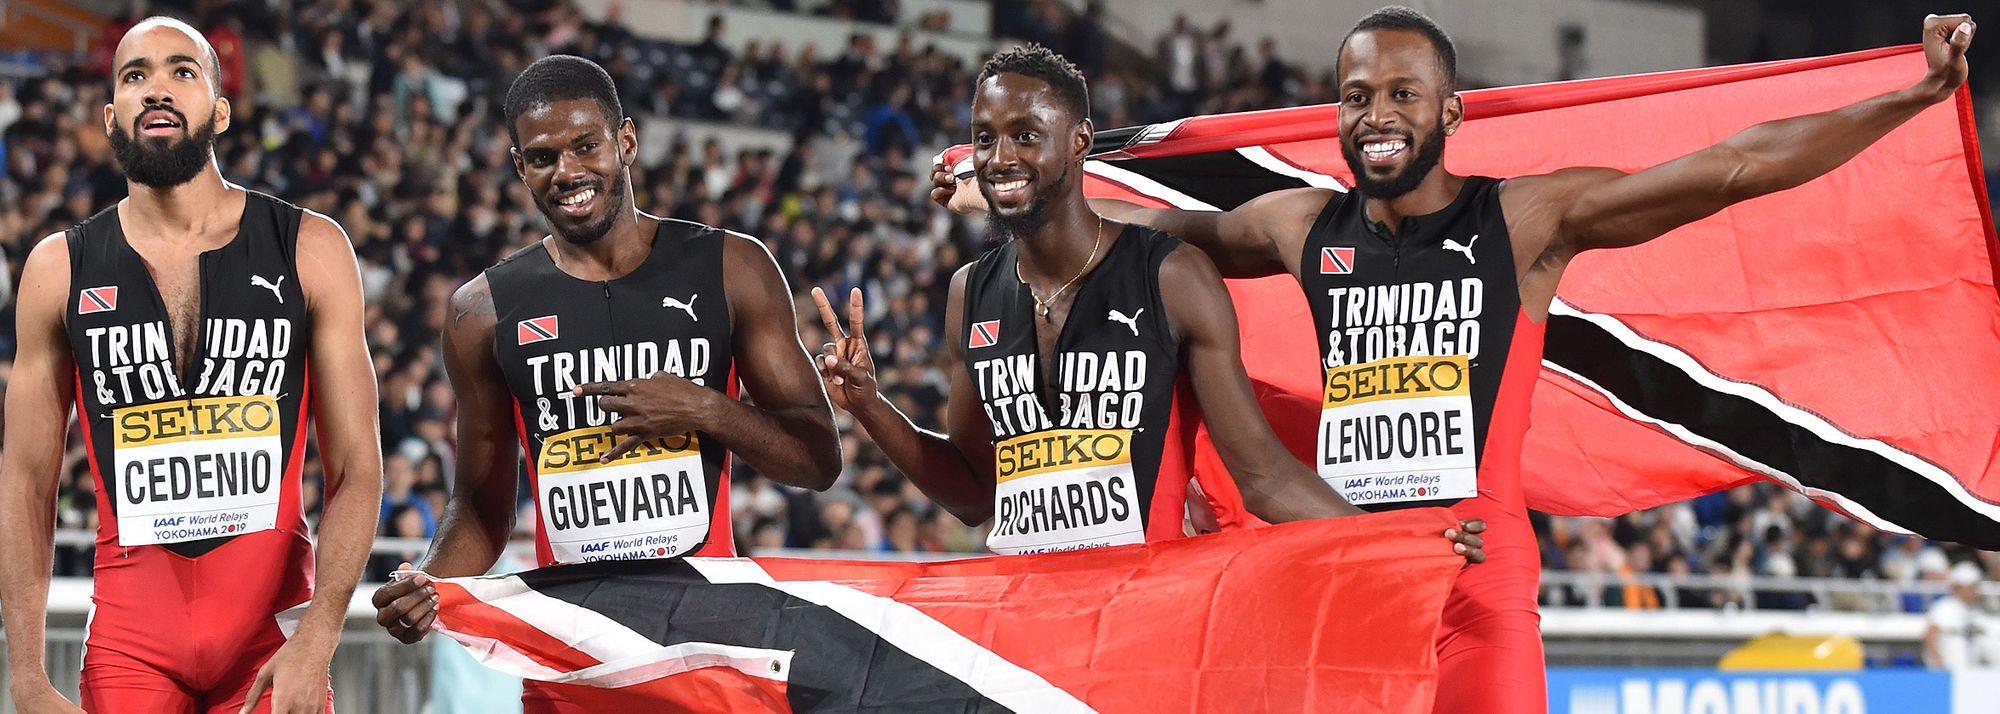 Machel Cedenio, Asa Guevara, Jereem Richards and Deon Lendore at the World Athletics Relays (© Getty Images)